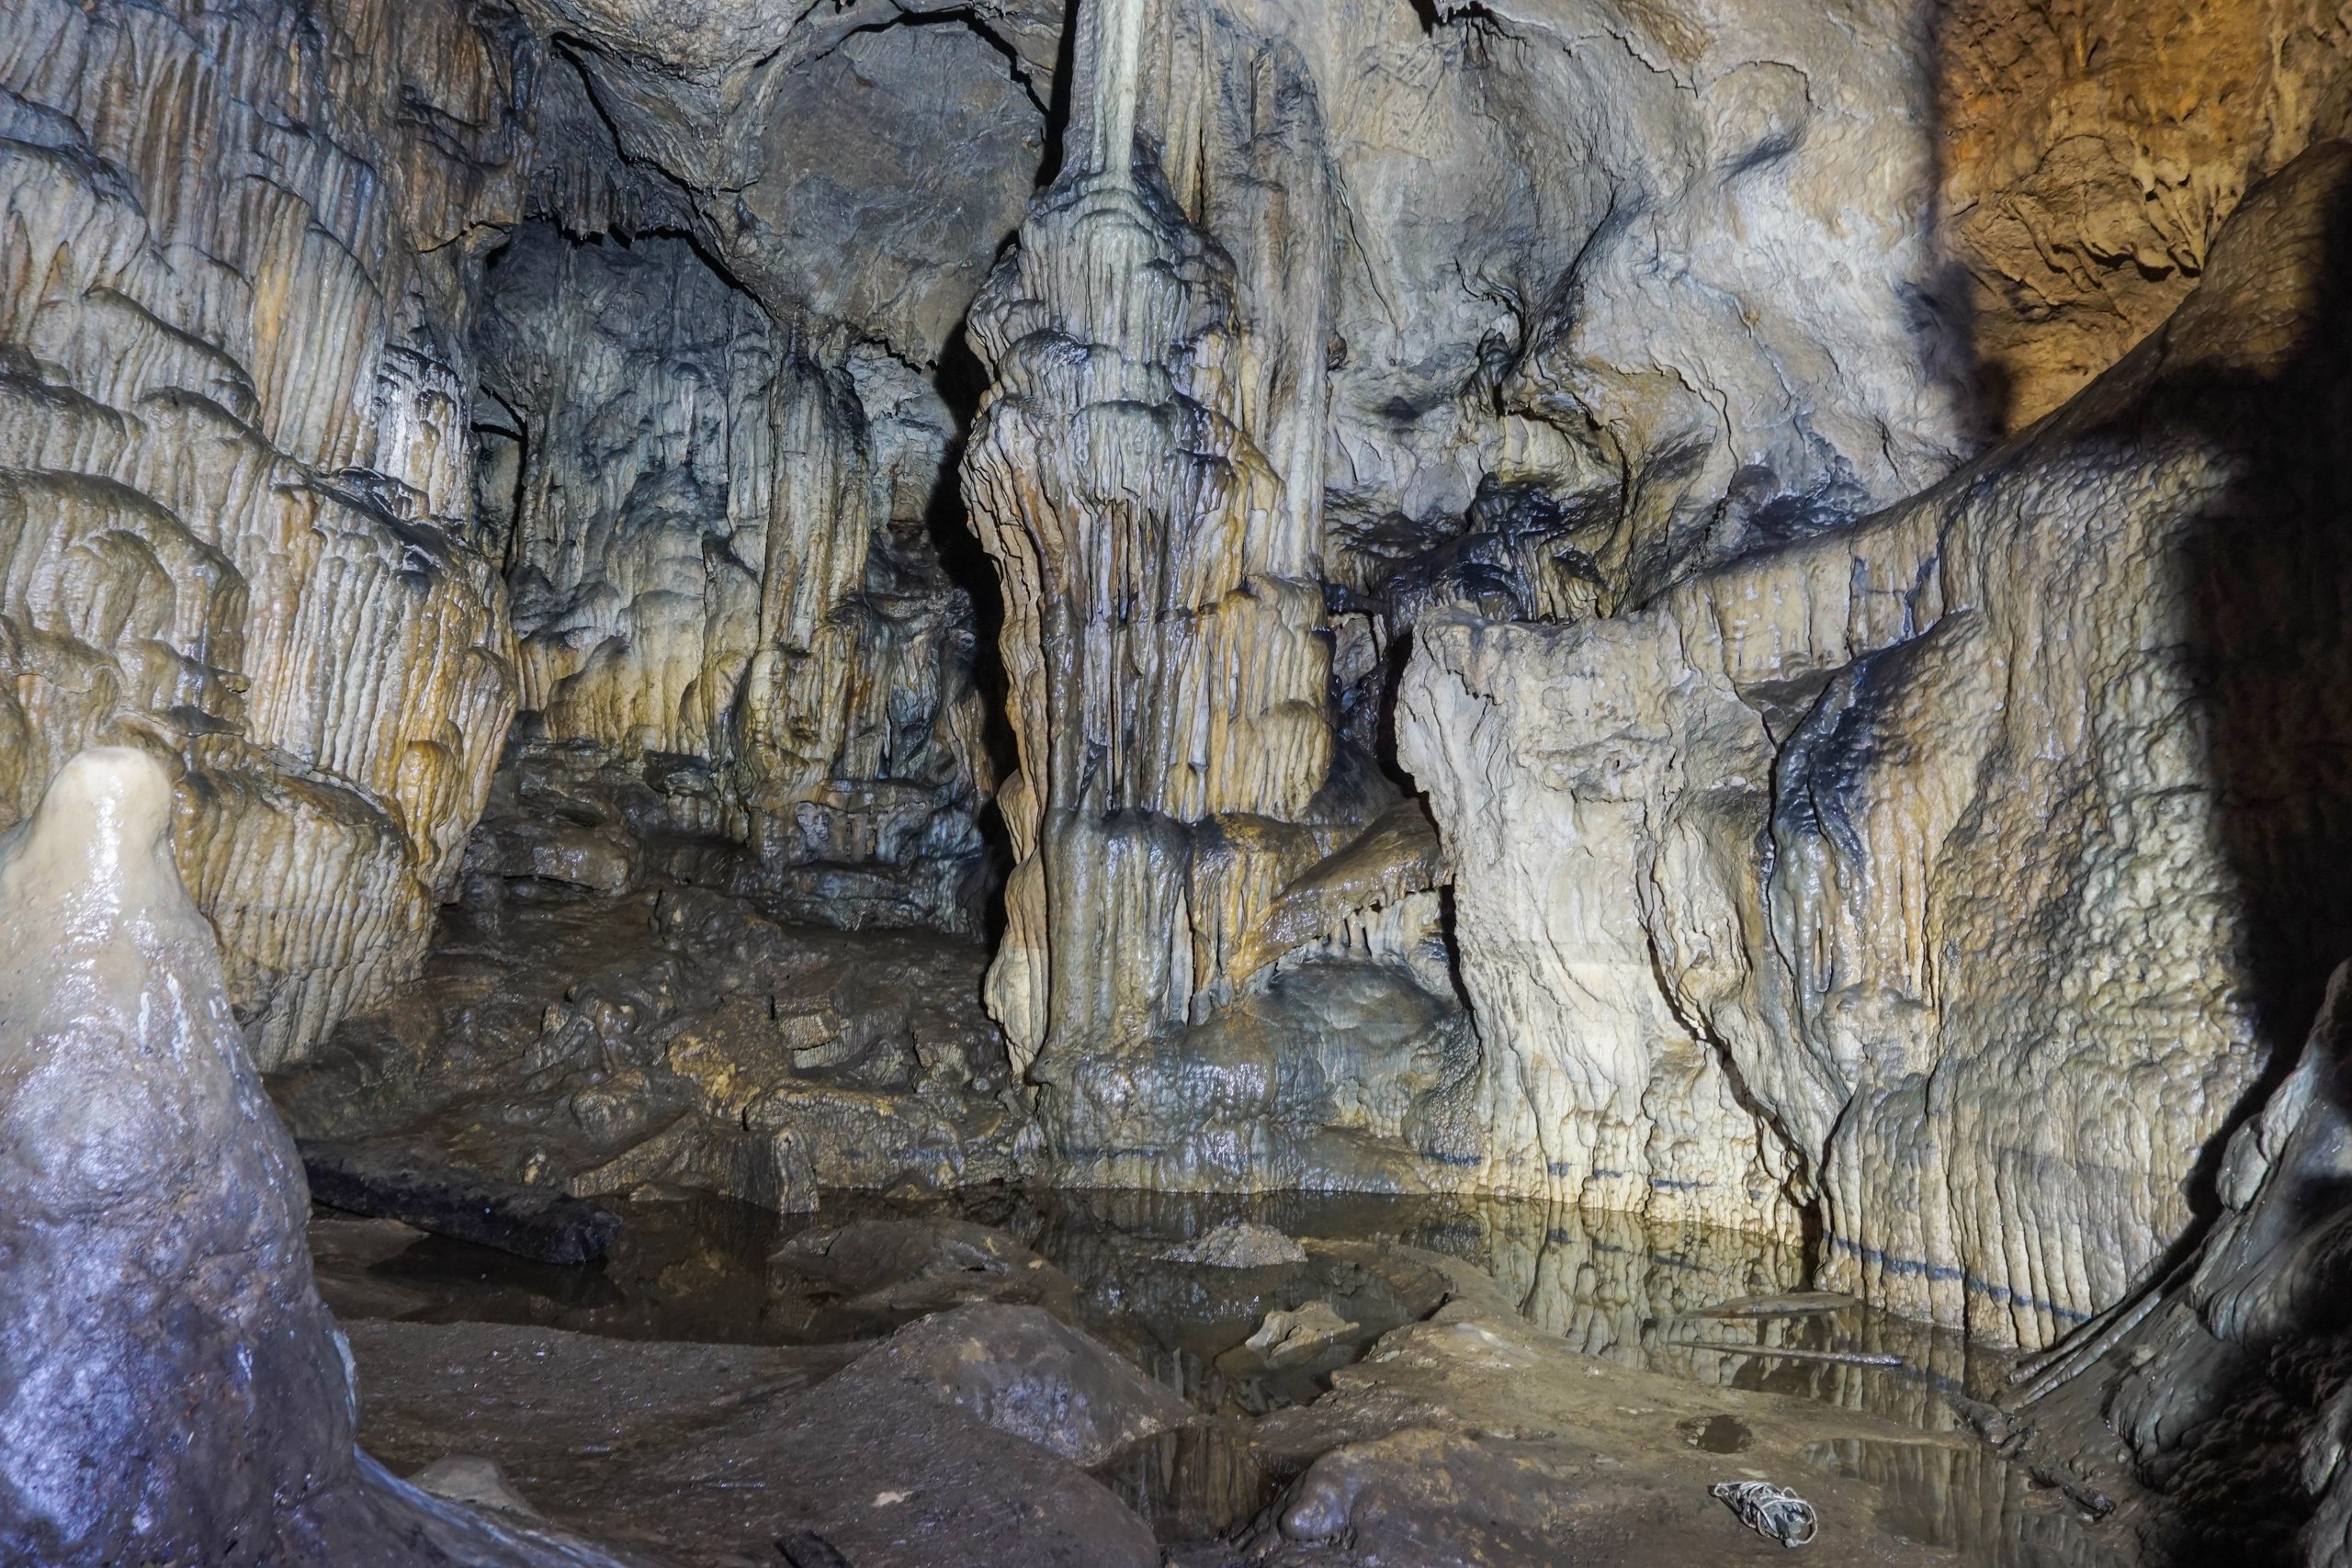 Пещера Озерная в Лаго-Наки